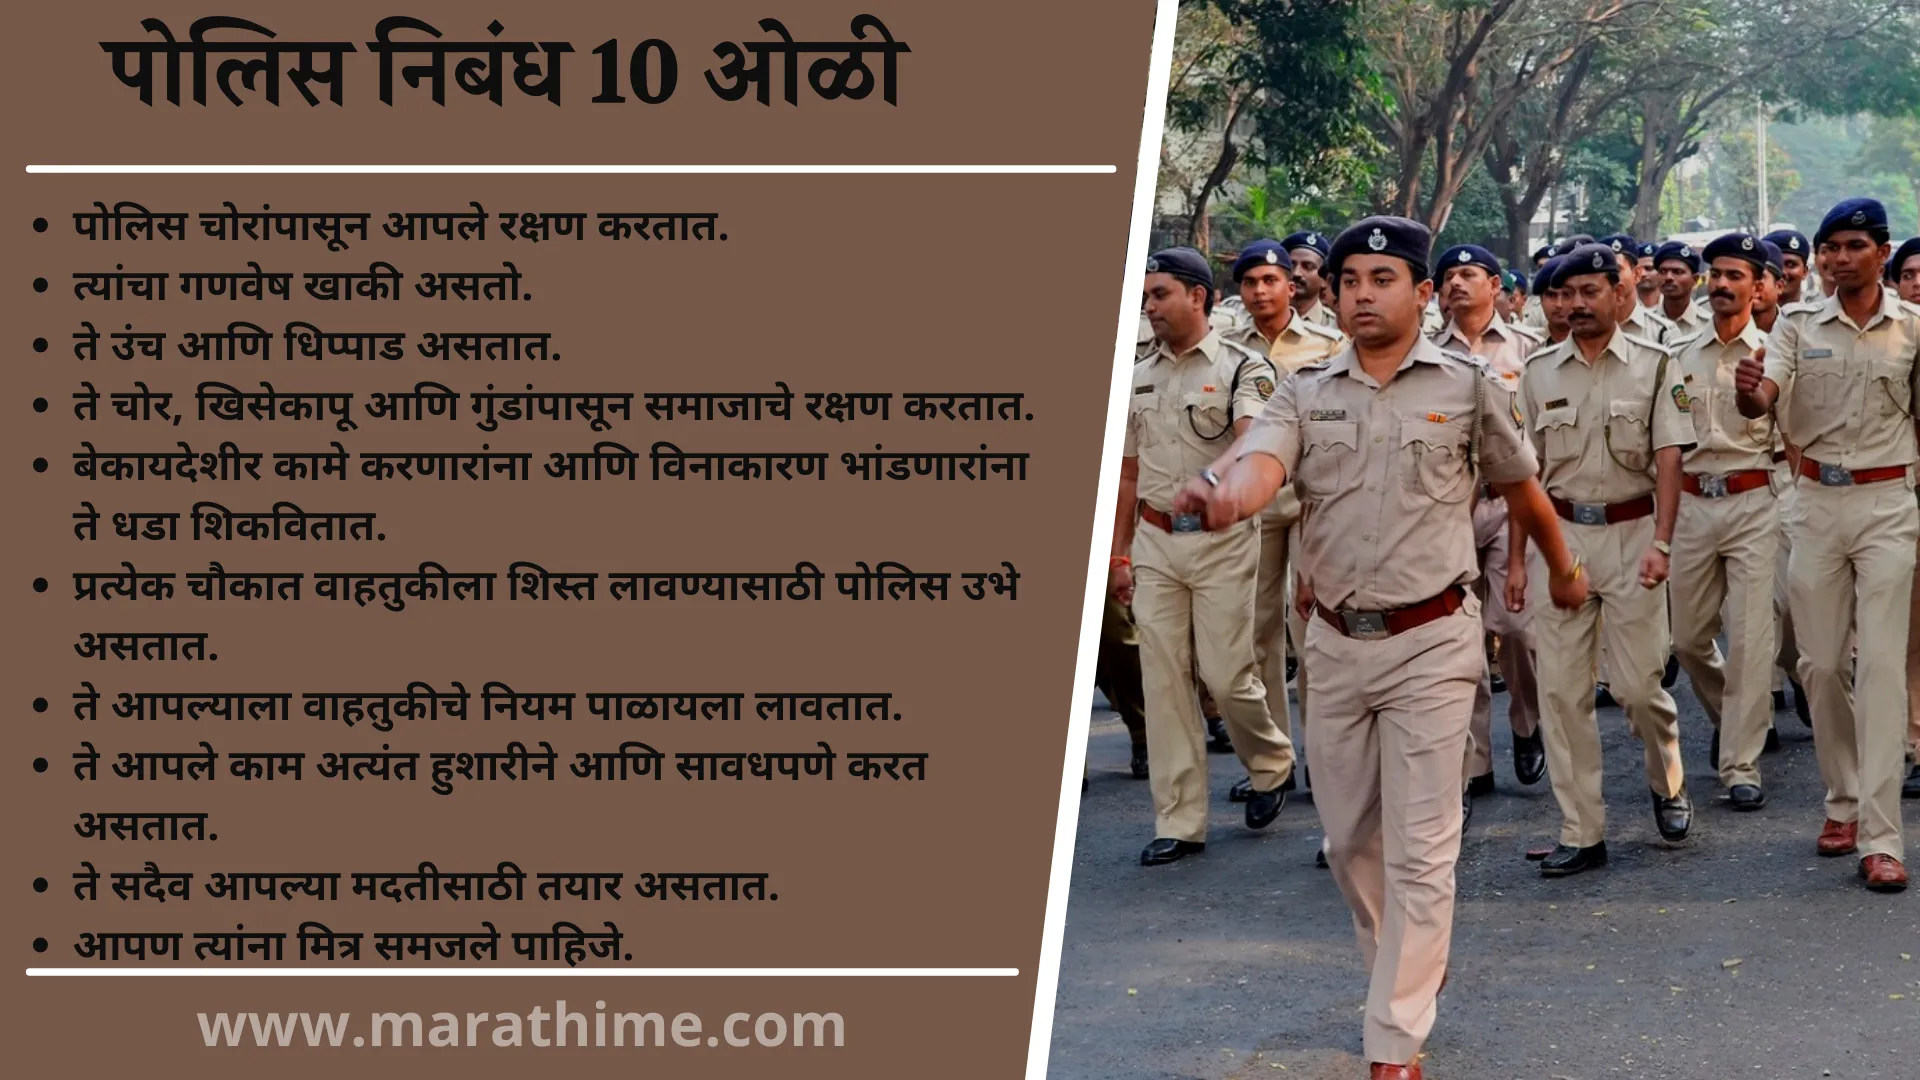 पोलिस निबंध 10 ओळी, 10 Lines on Police in Marathi, Essay on Police in Marathi